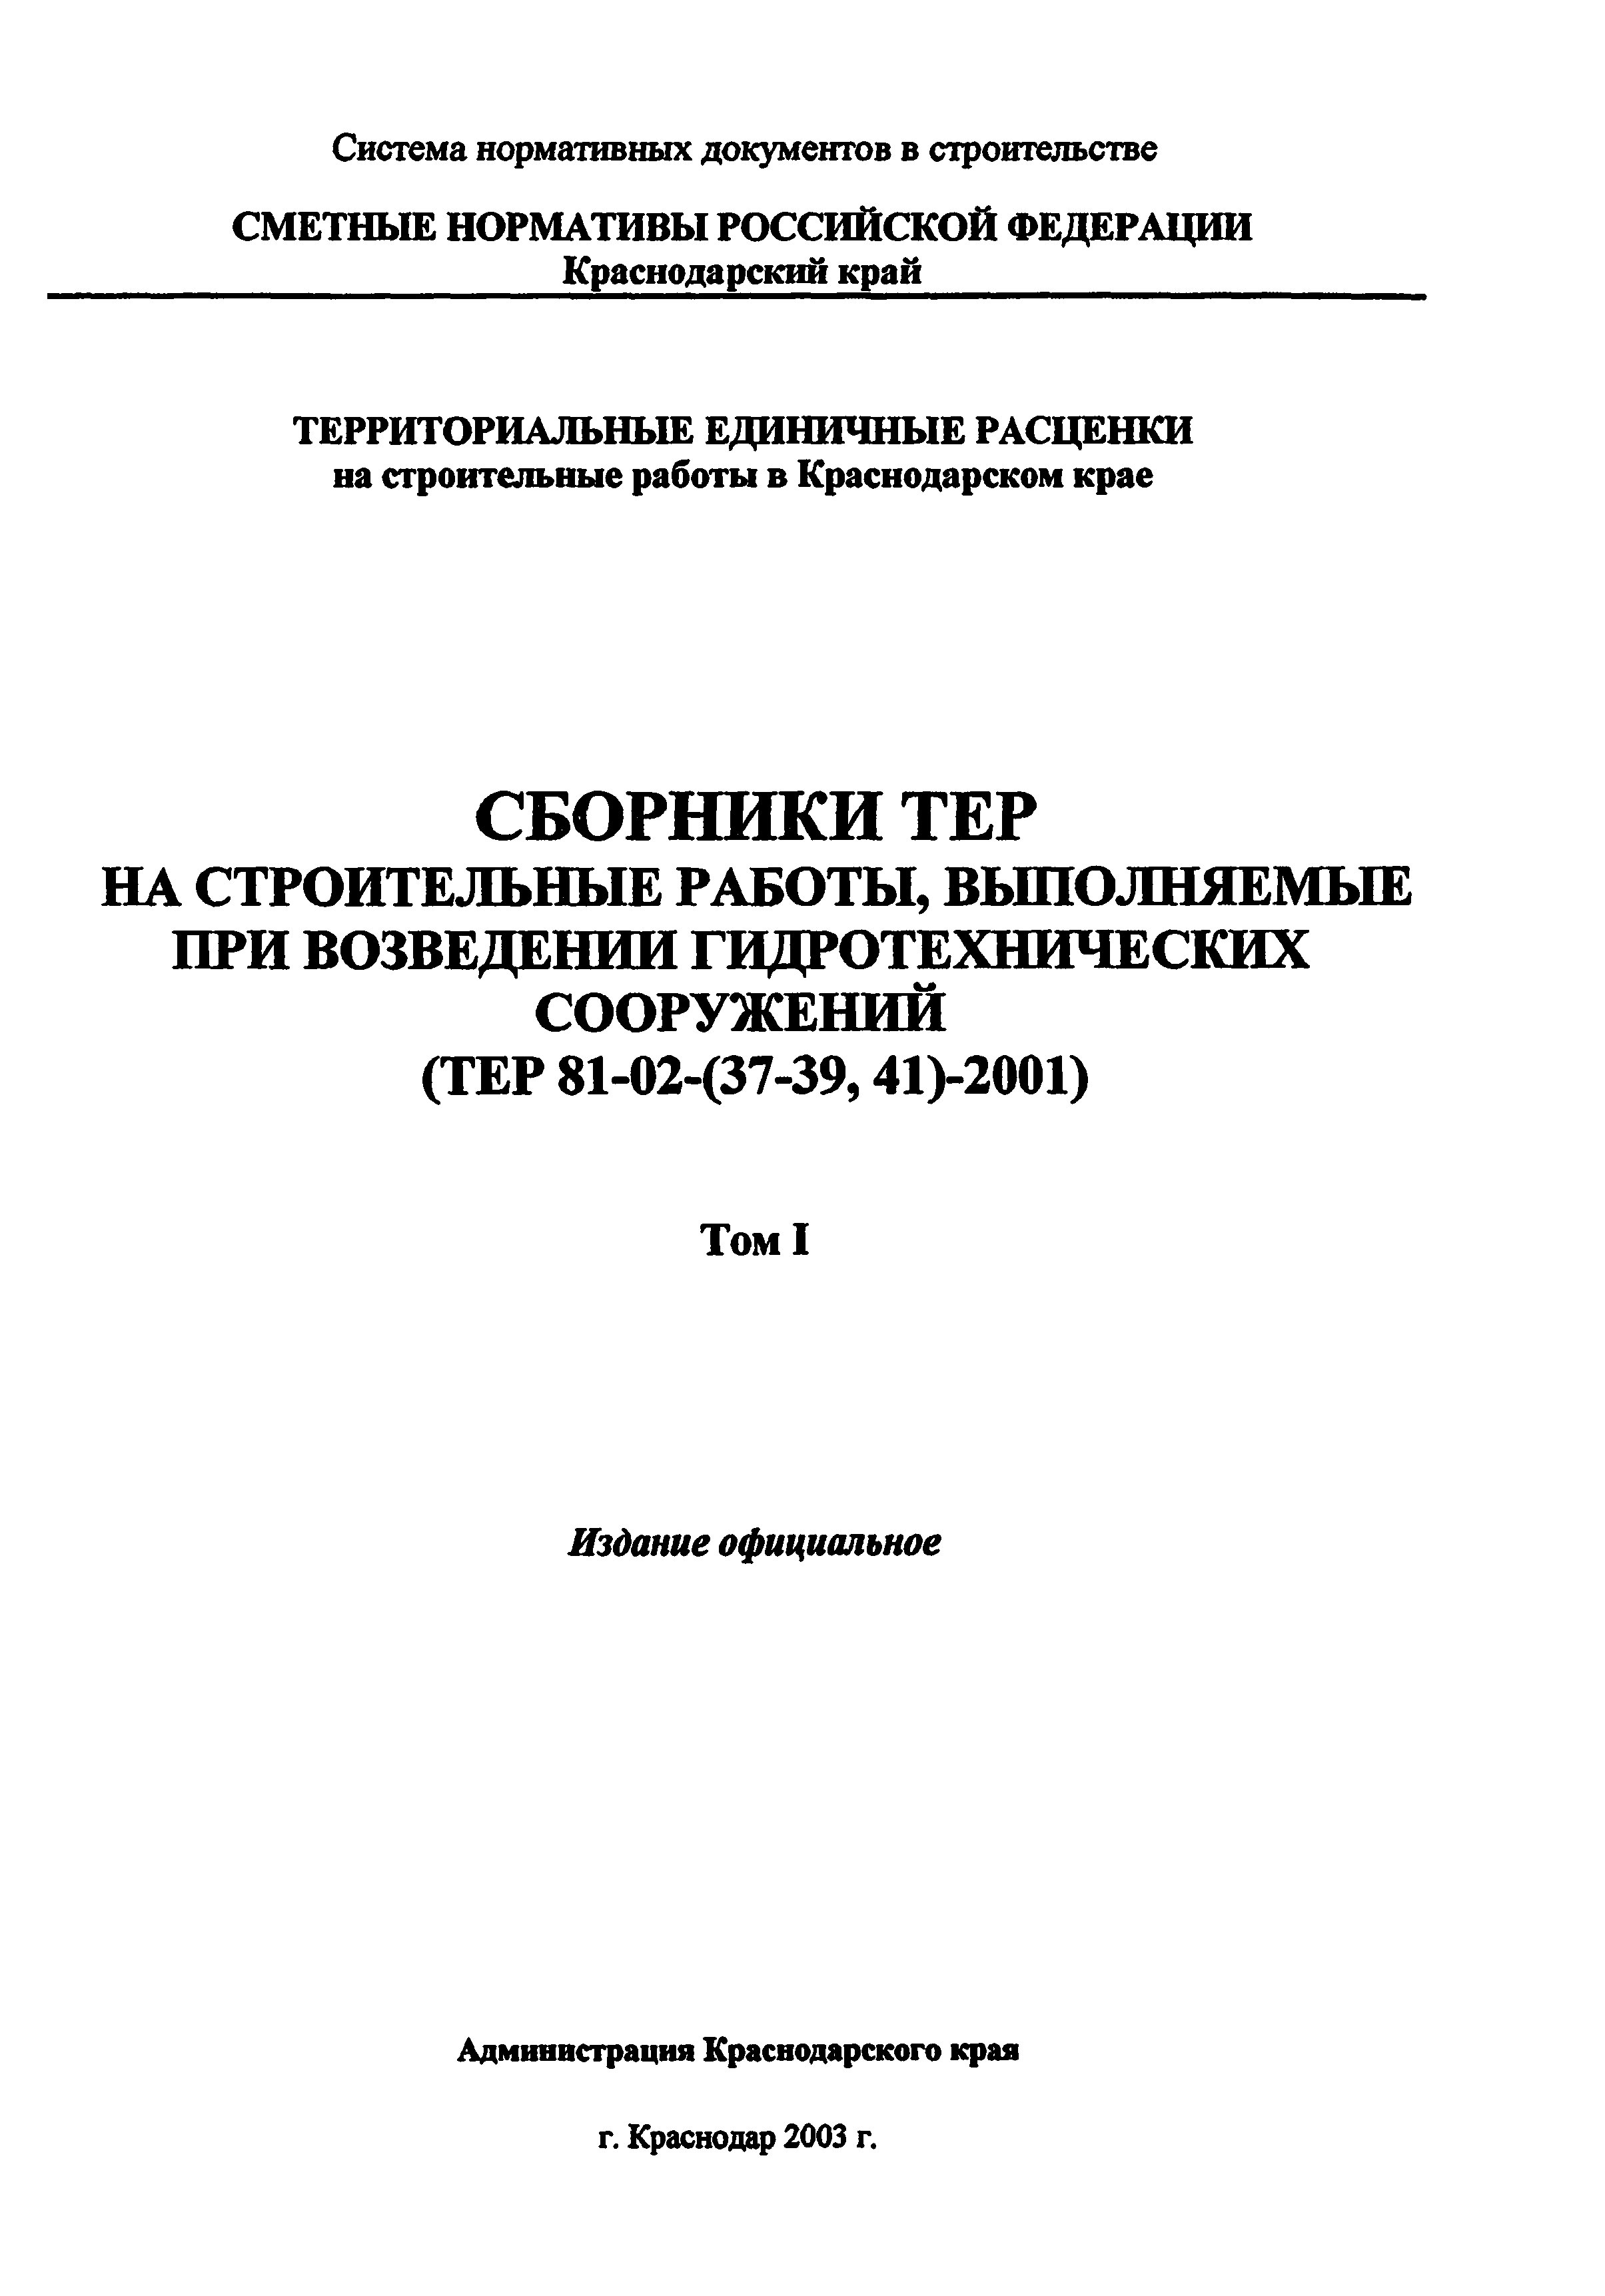 ТЕР Краснодарского края 2001-37